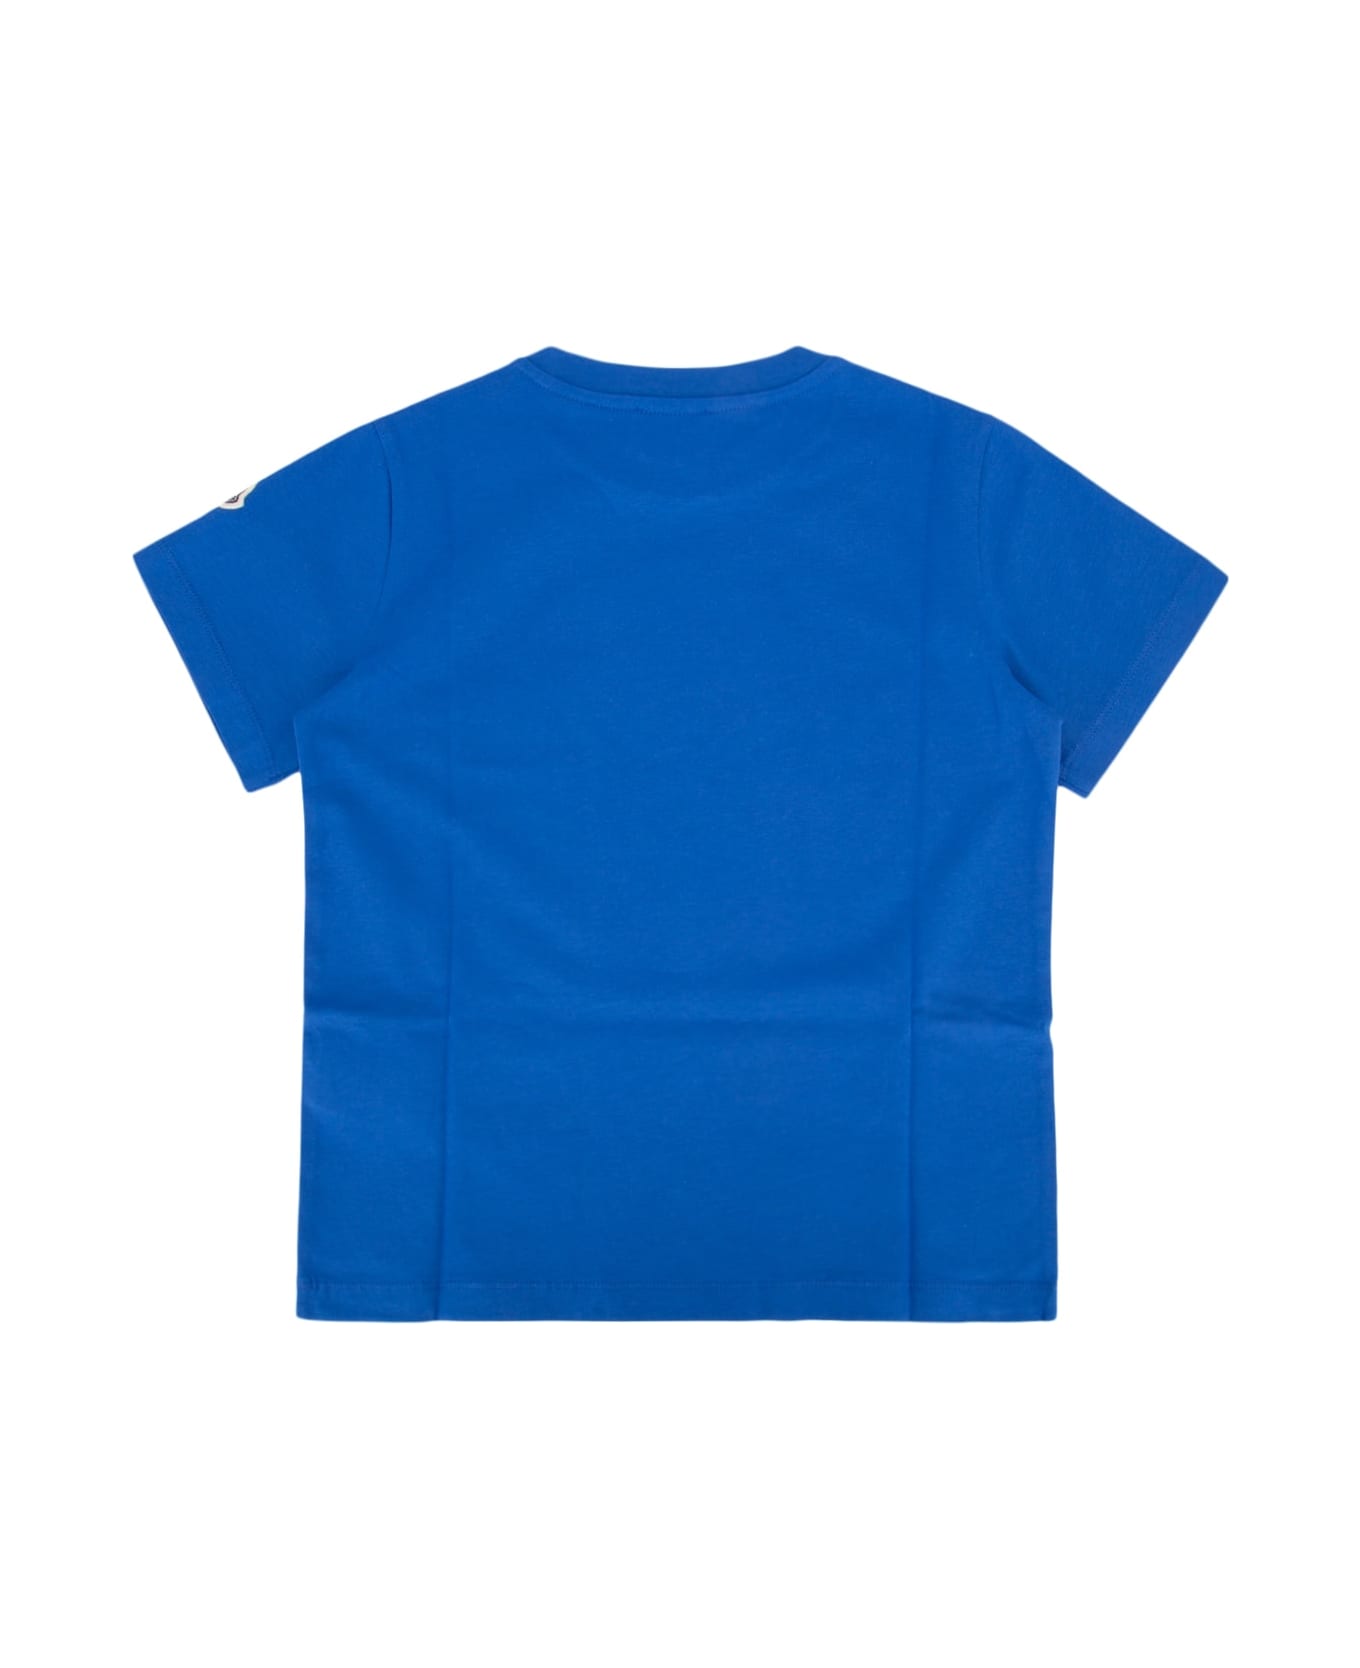 Moncler T-shirt - 711 Tシャツ＆ポロシャツ